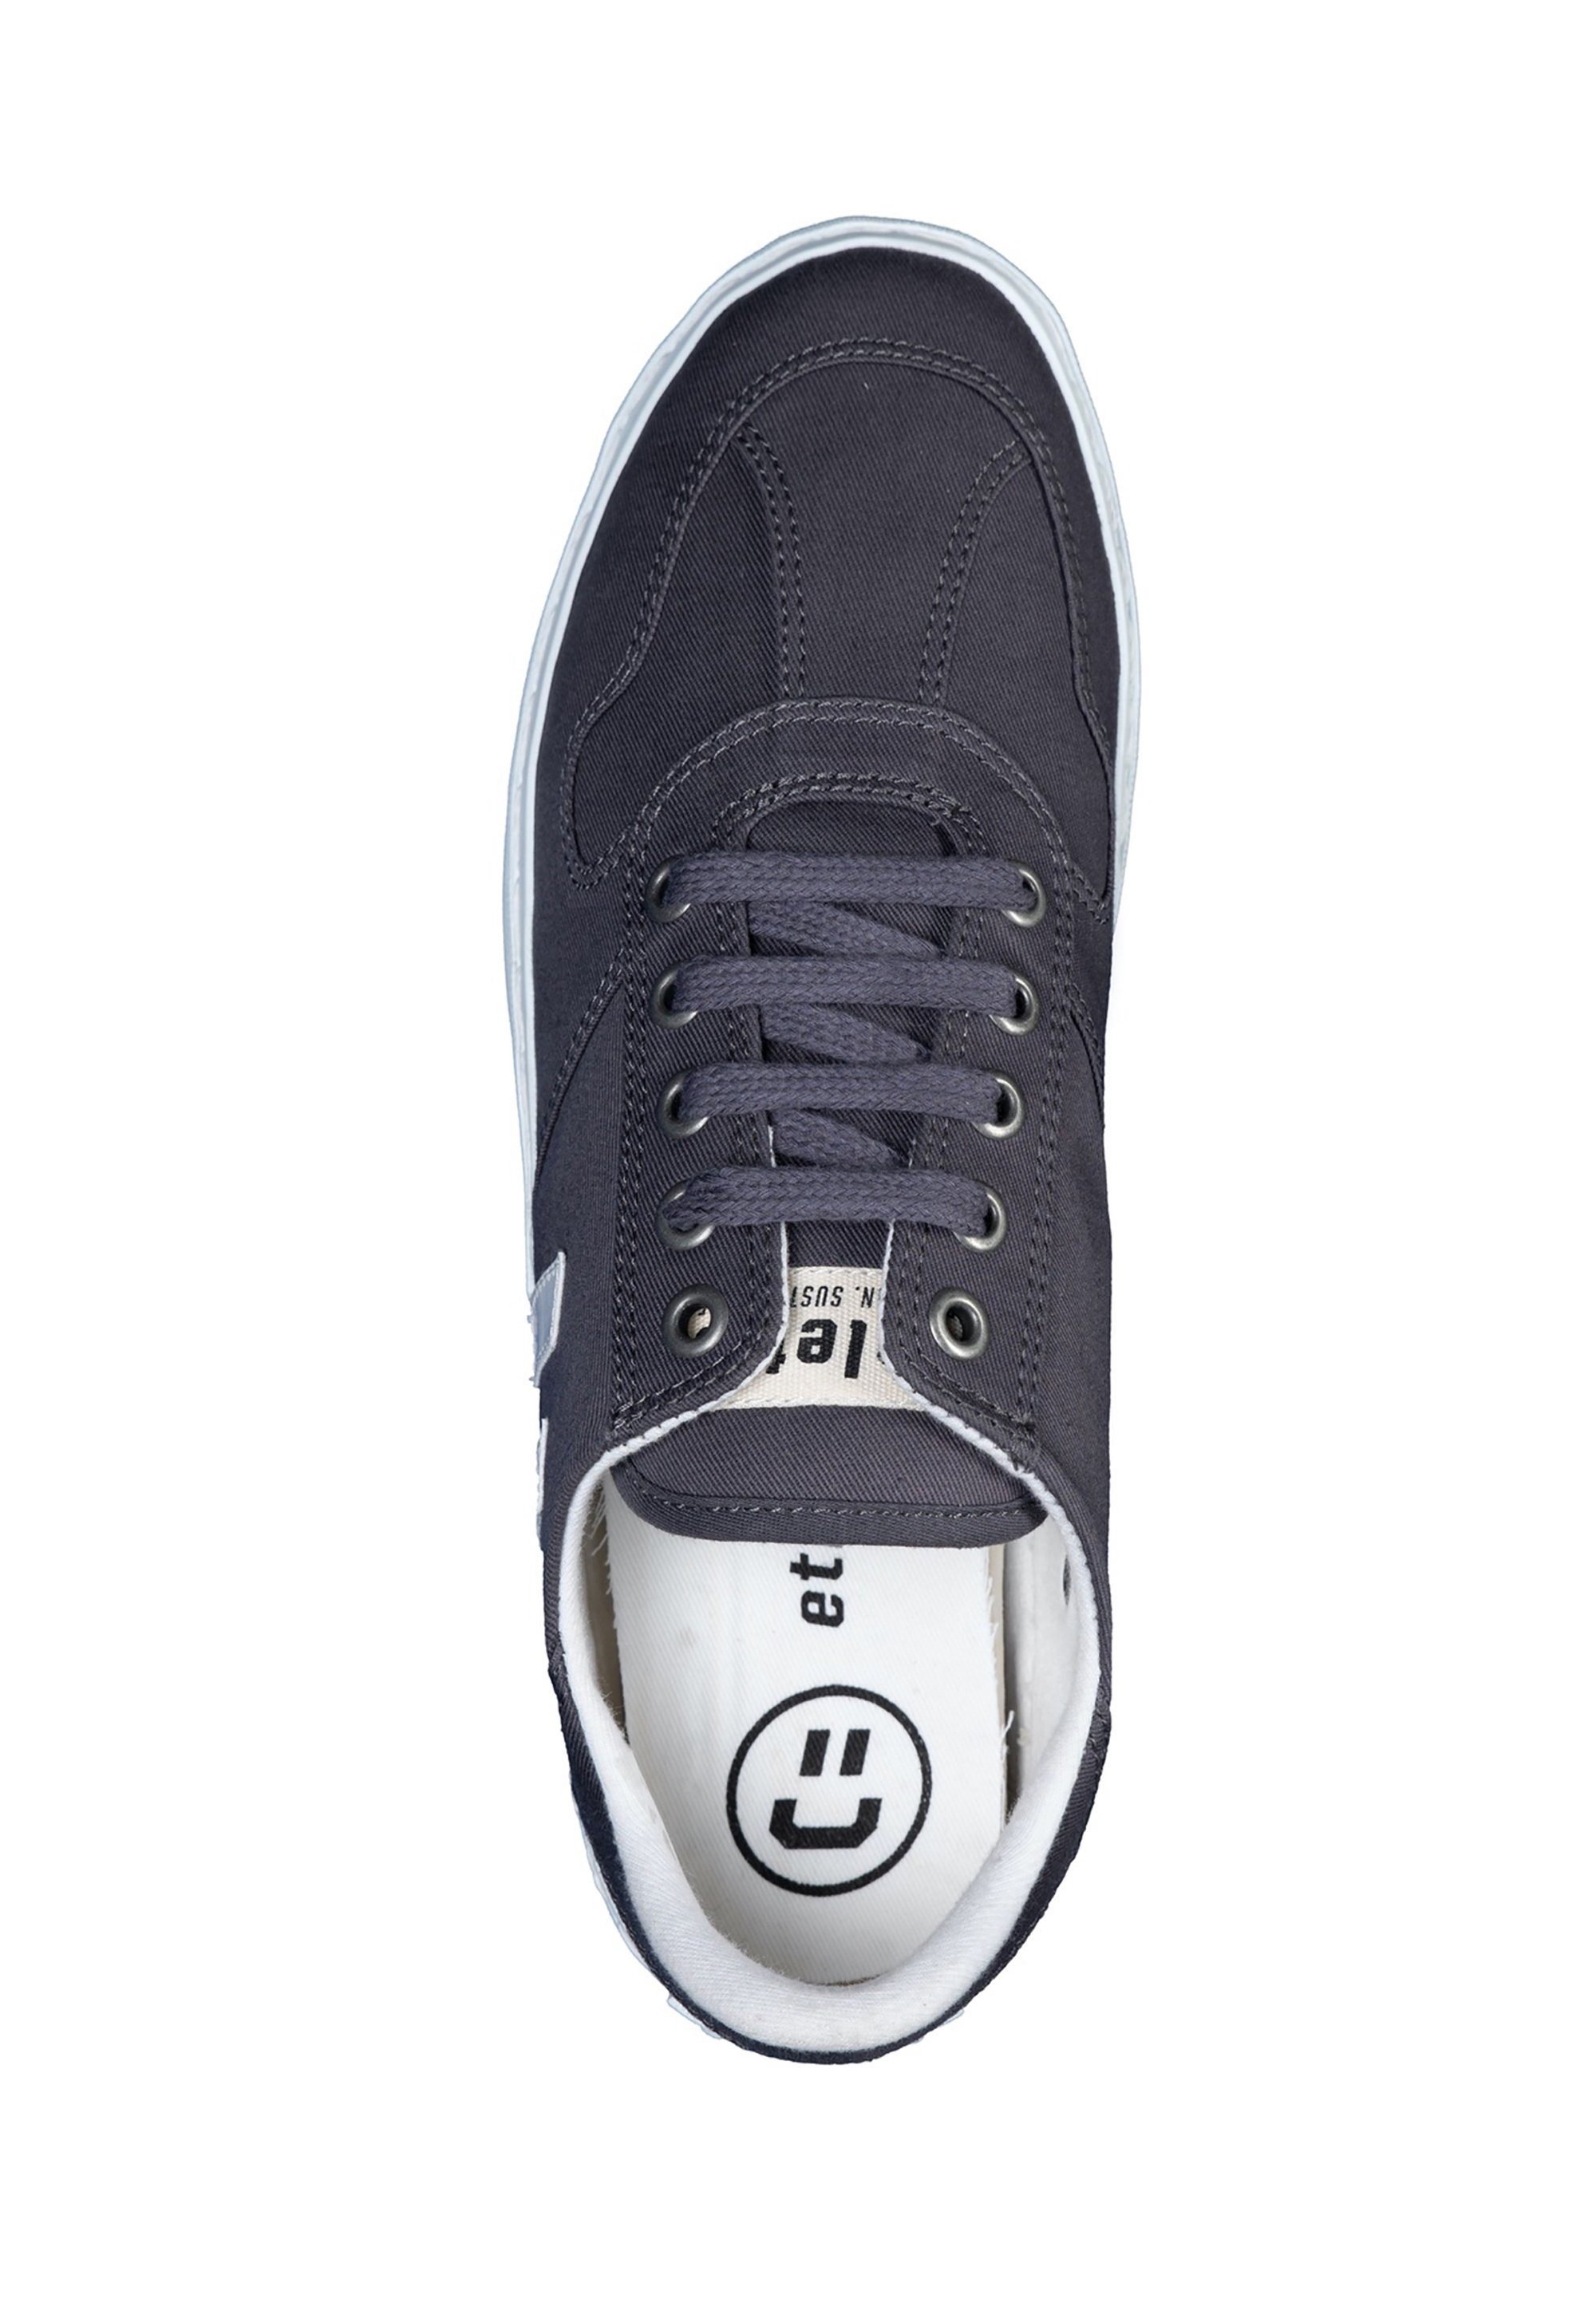 II Fairtrade ETHLETIC Produkt pewter Root Sneaker grey